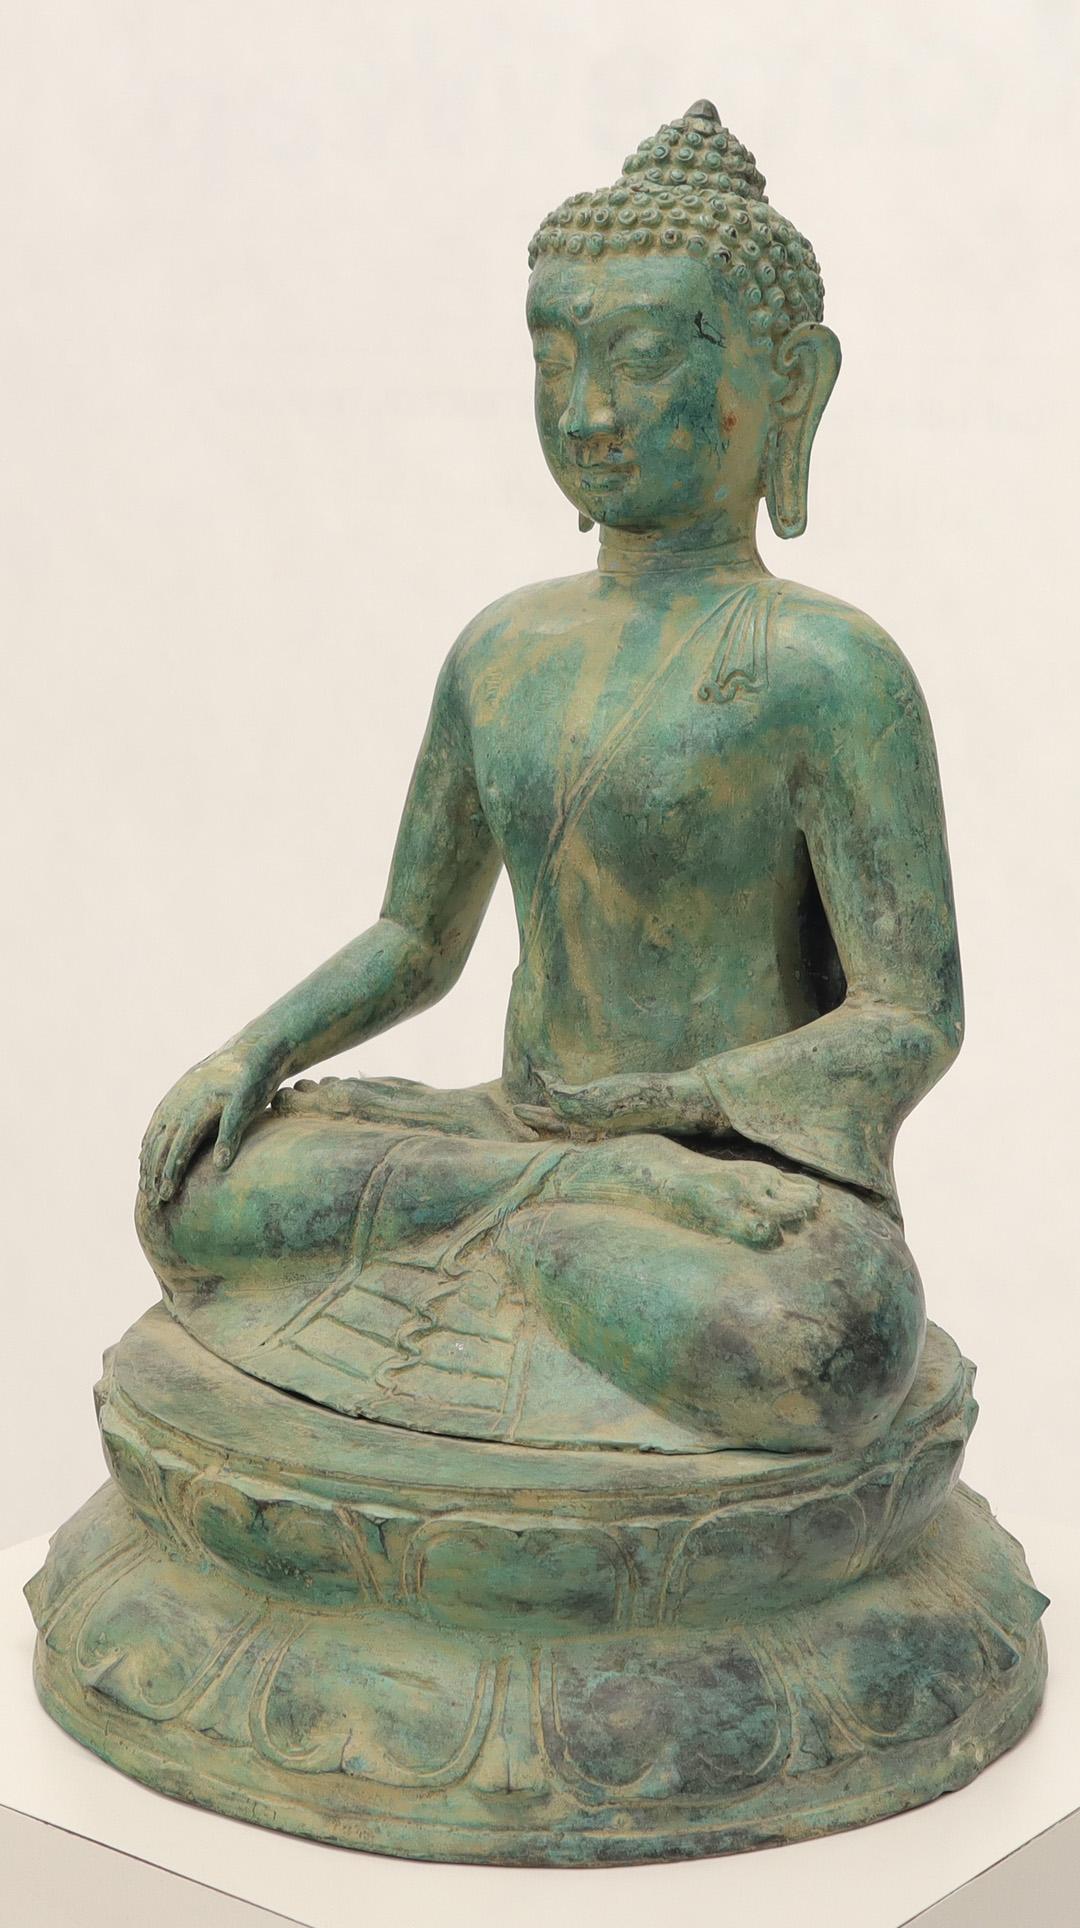 Bronze Buddha sculpture. Measure: 14